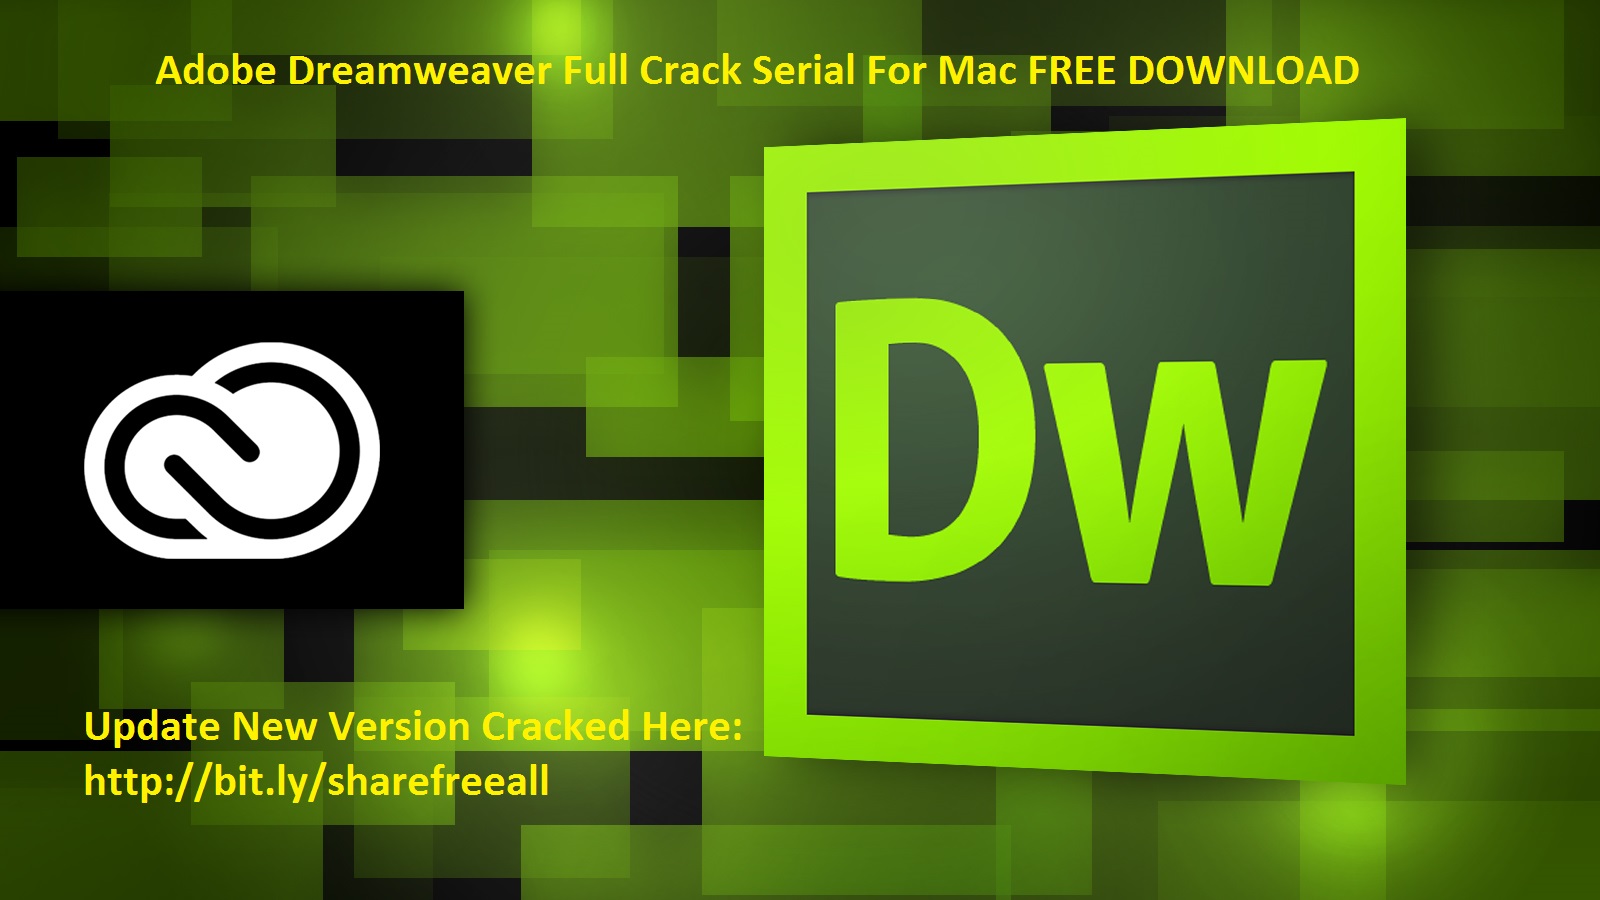 adobe dreamweaver crack version download